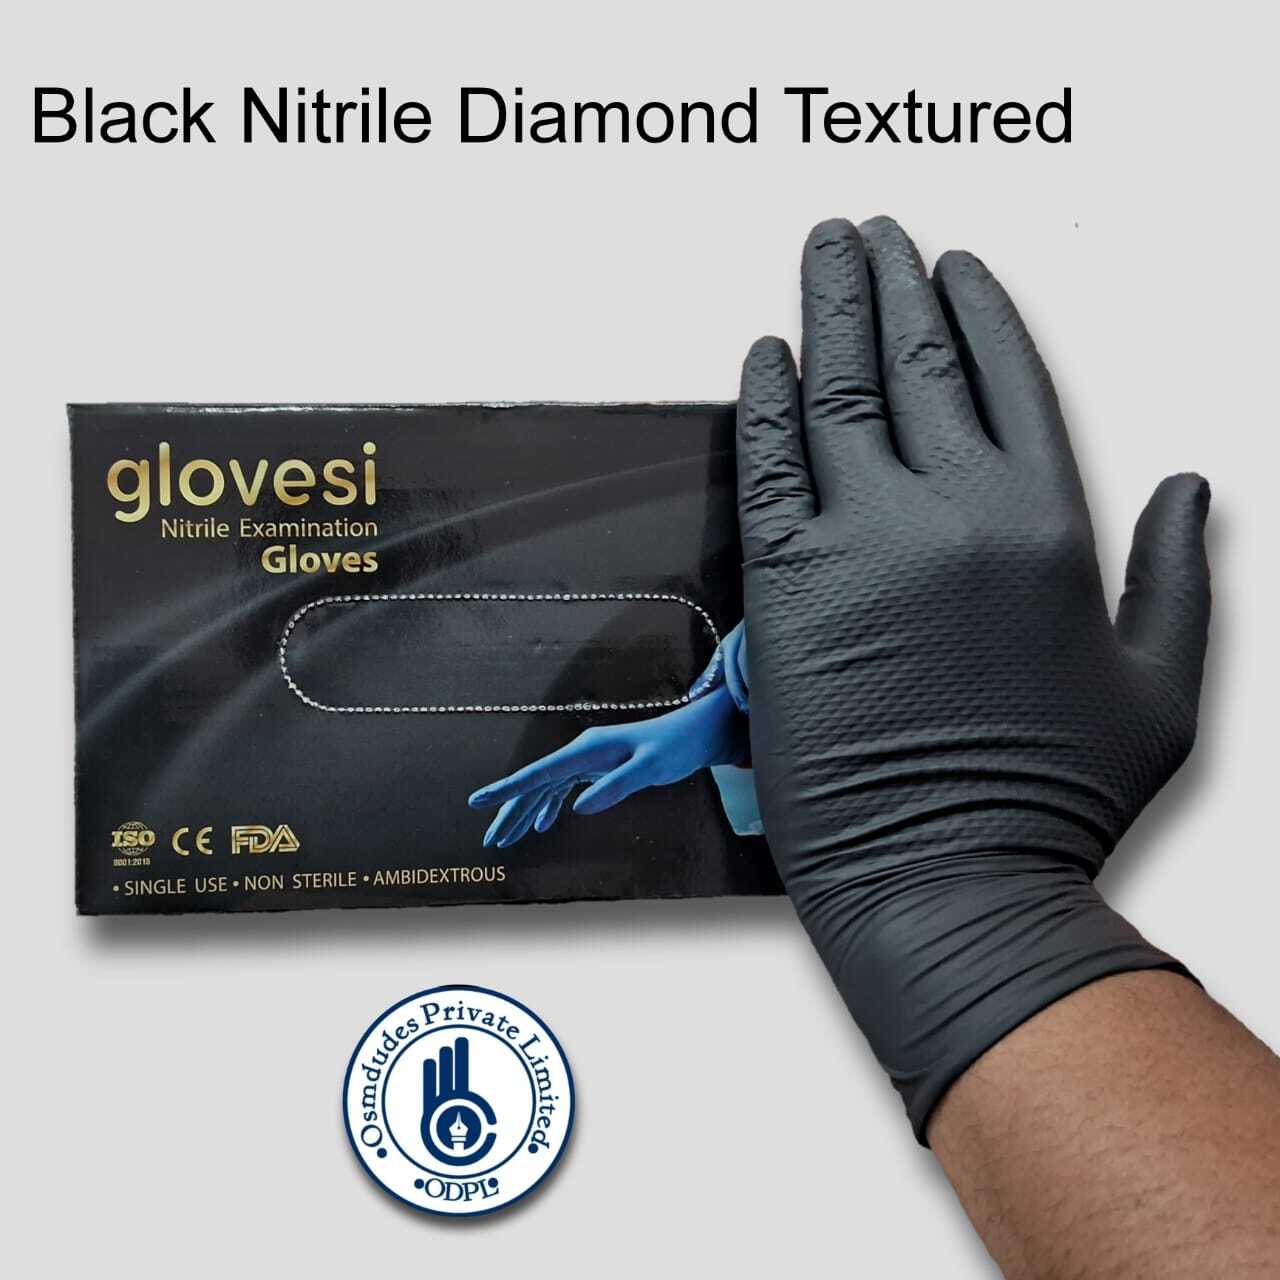 8 Mil Black Nitrile Powder Free Disposable Medical Examination Glove